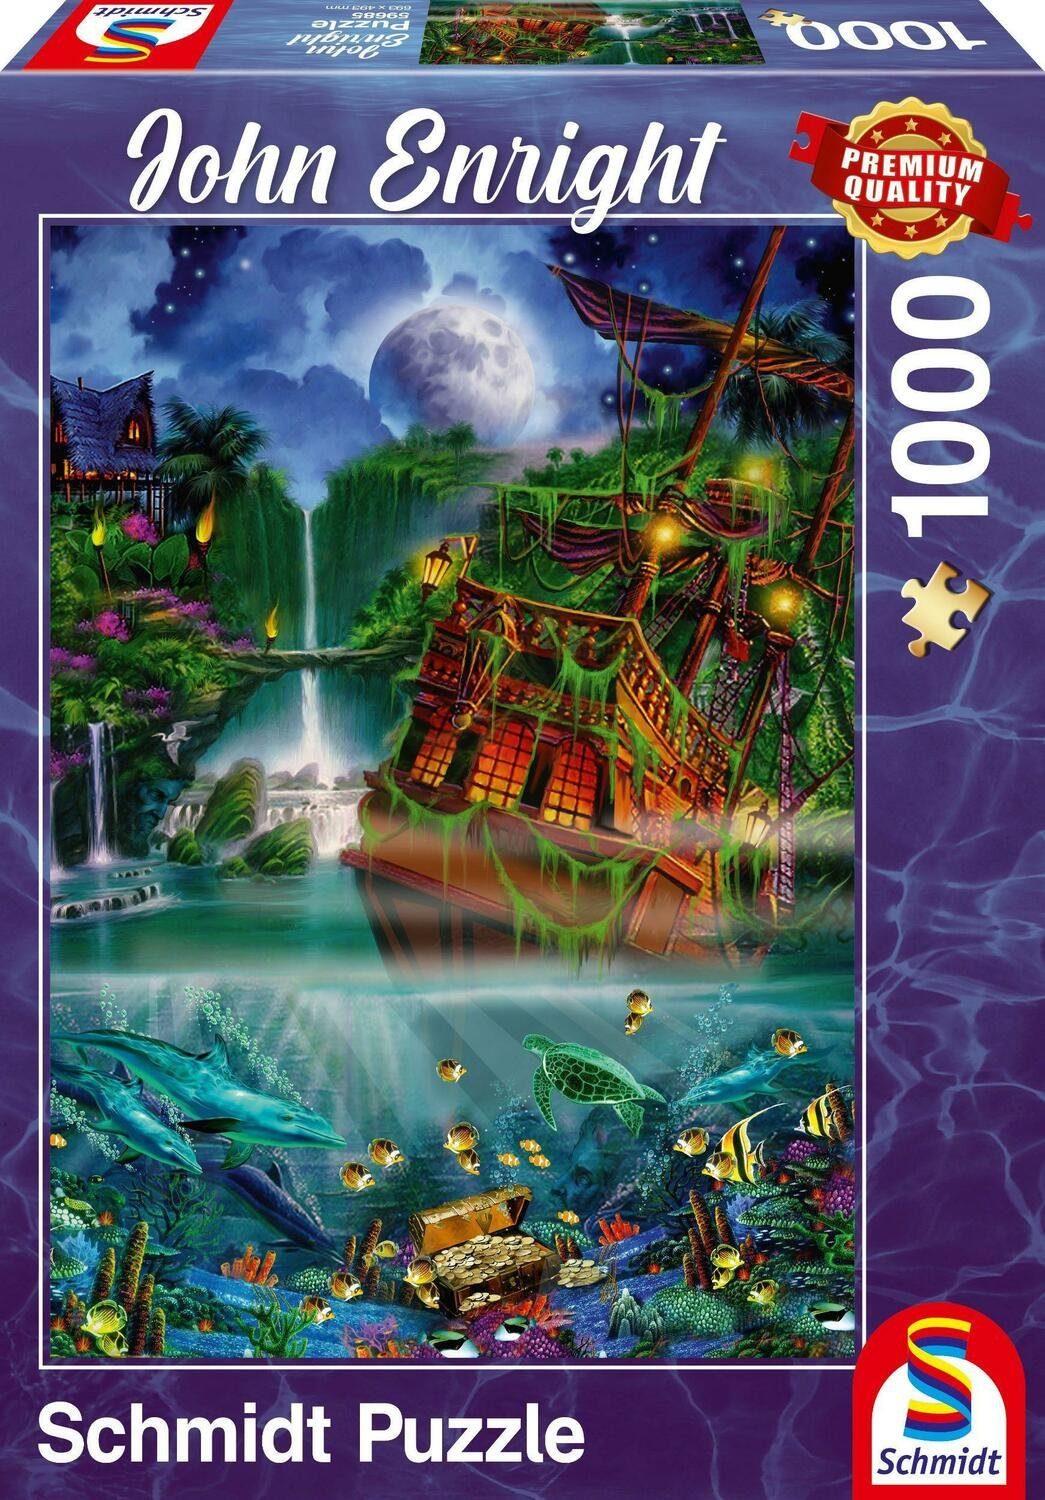 Schmidt Spiele Puzzle Versunkener Schatz Puzzle 1.000 Teile, 1000 Puzzleteile